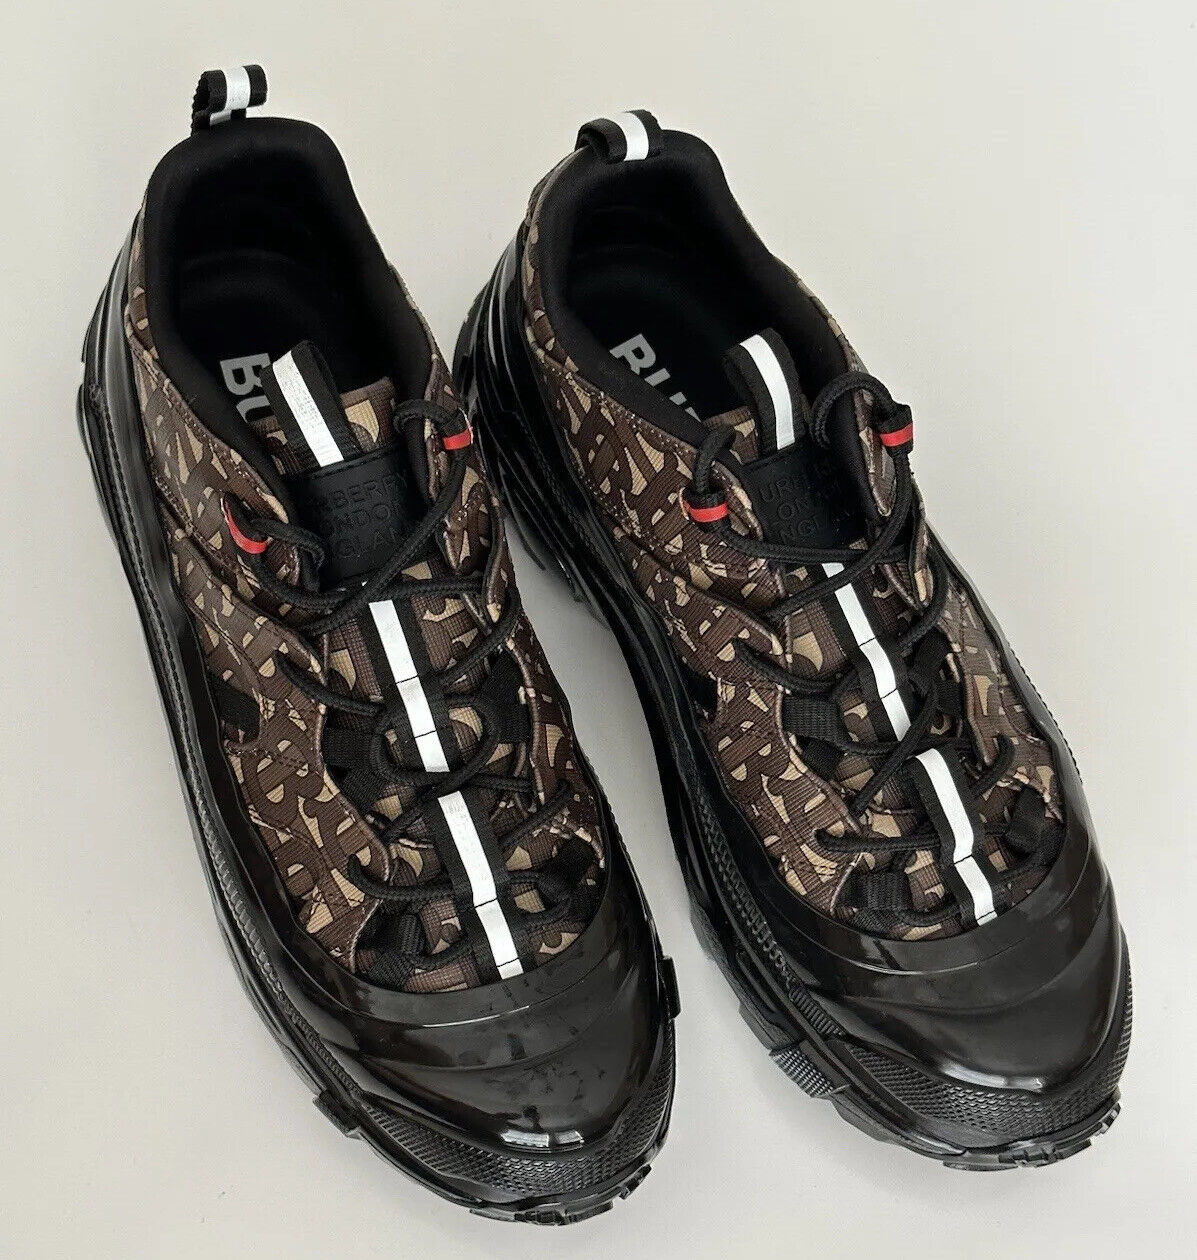 NIB 870 $ Burberry Arthur Herren-Braut-Sneaker aus braunem Leder 10 US (43) 8021778 